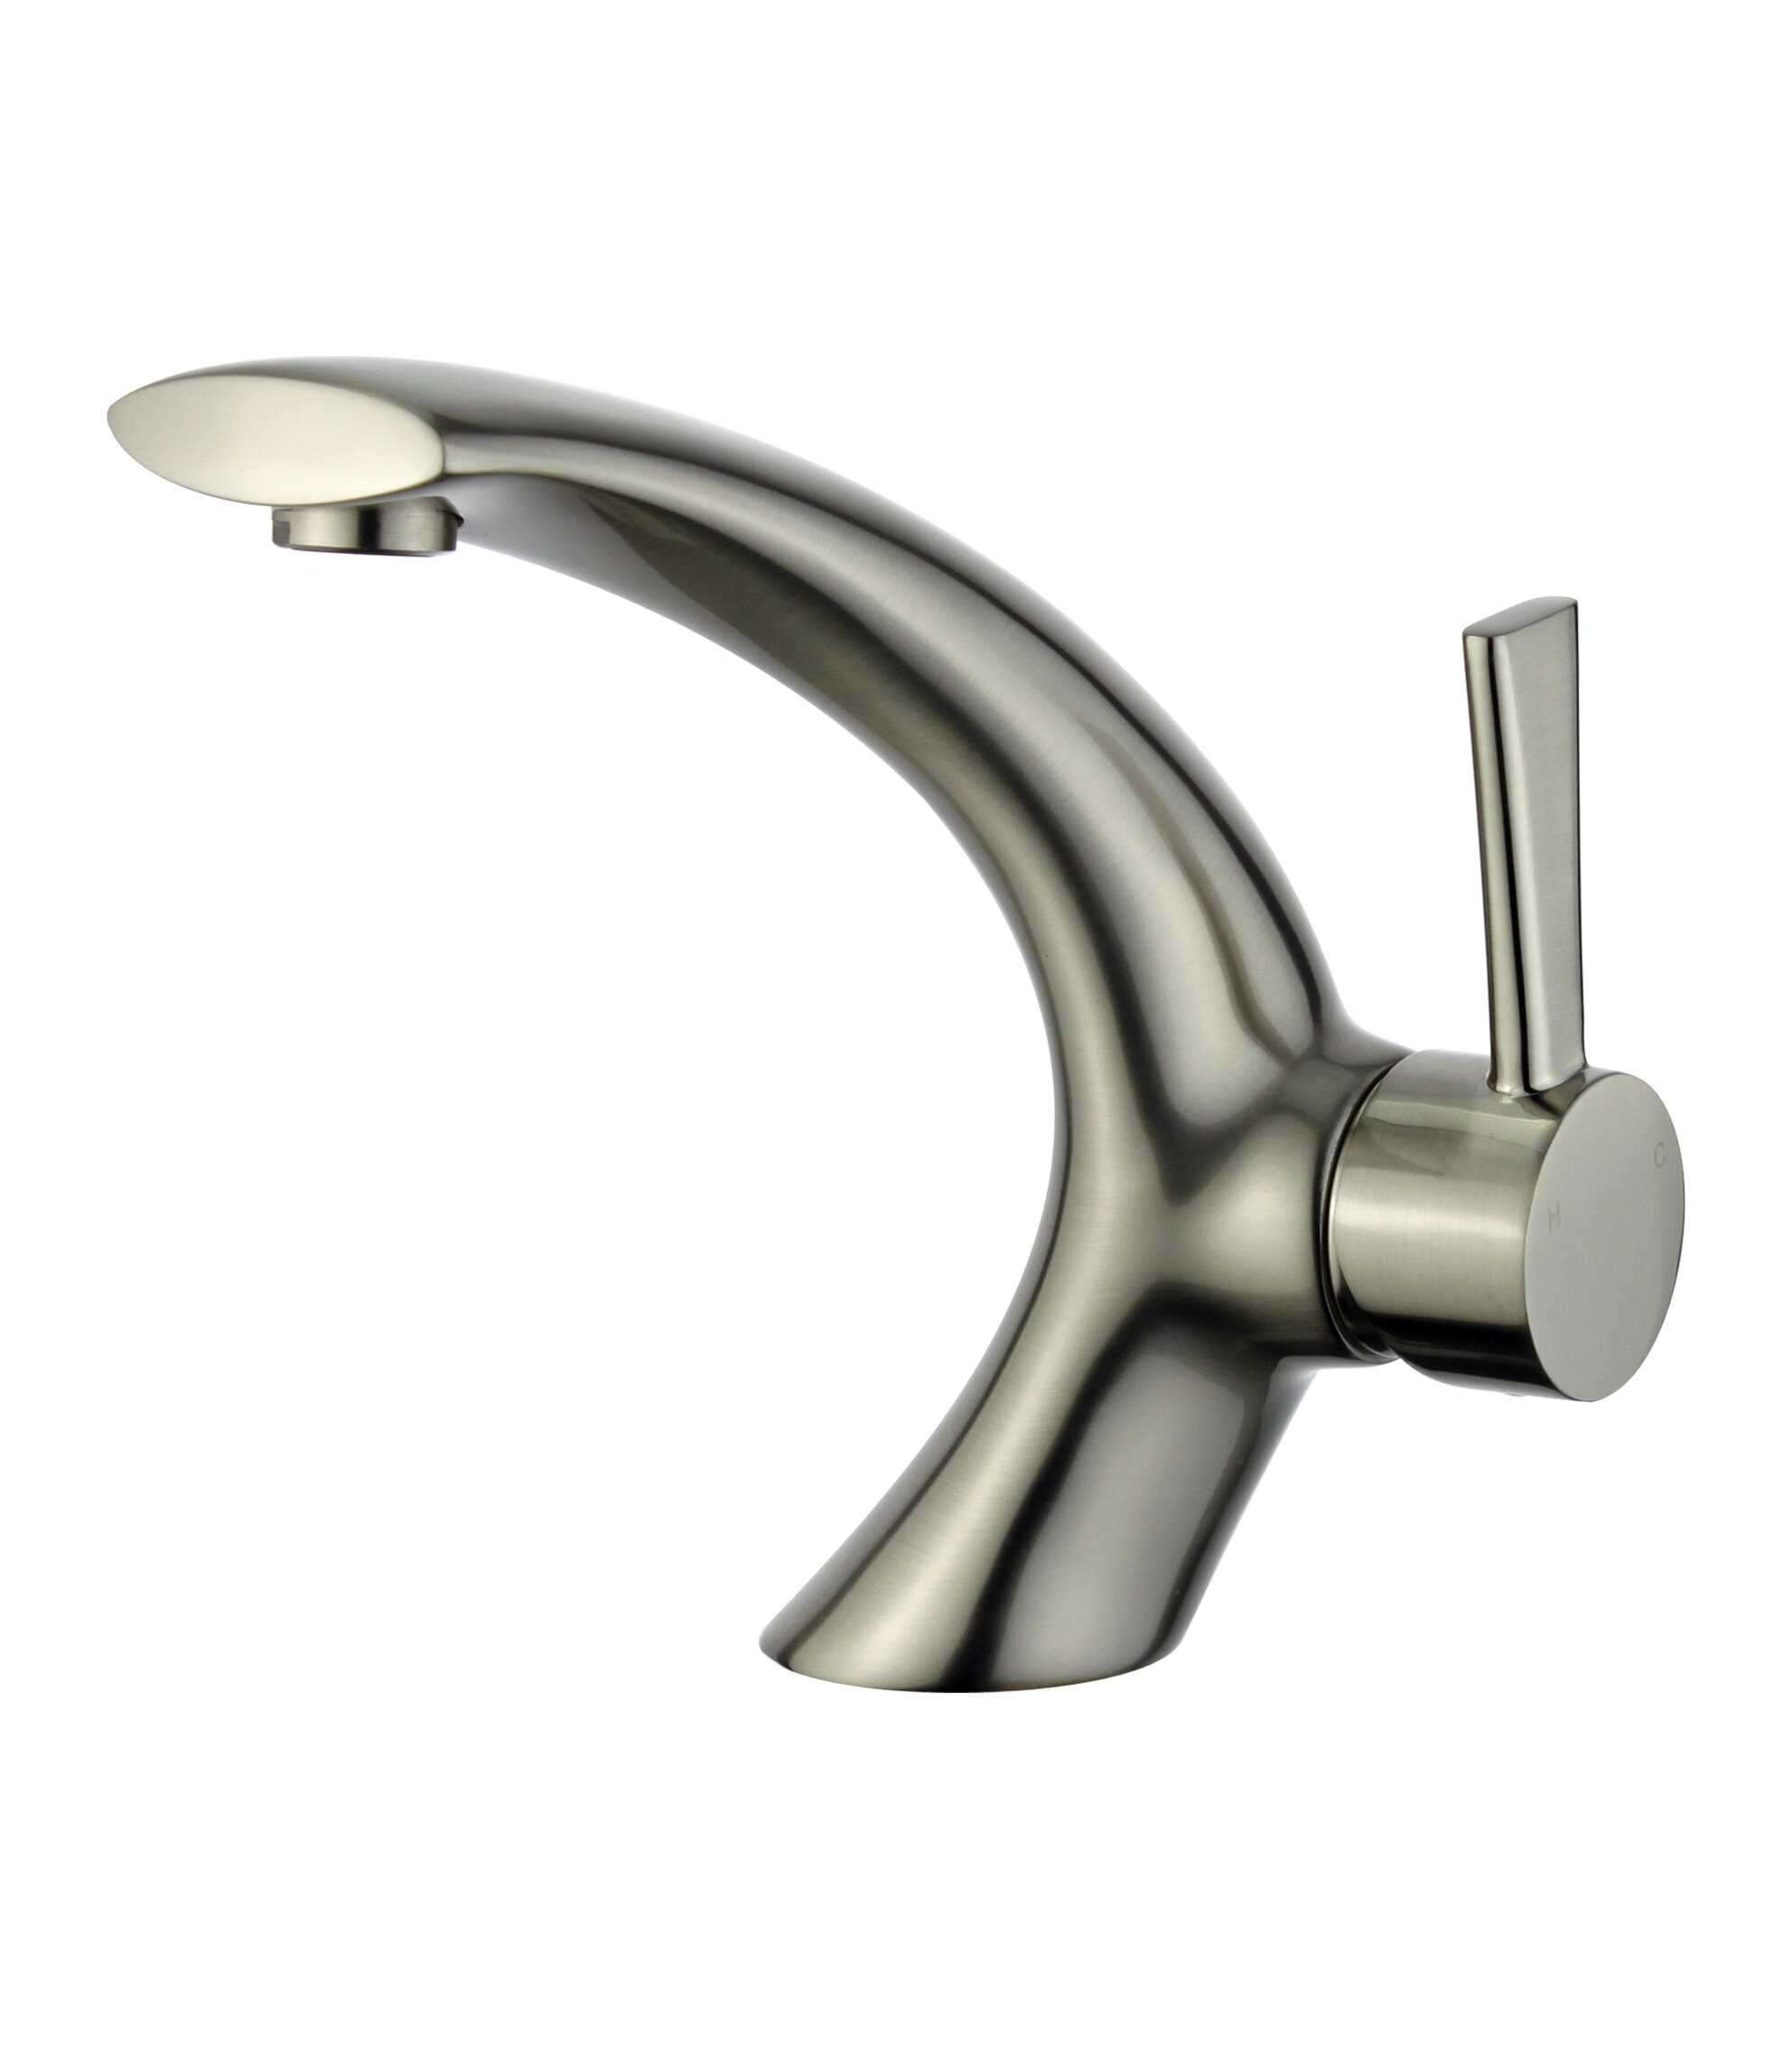 Bellaterra Home Bilbao Single Hole Bathroom Faucet With Drain Assembly Reviews Wayfair